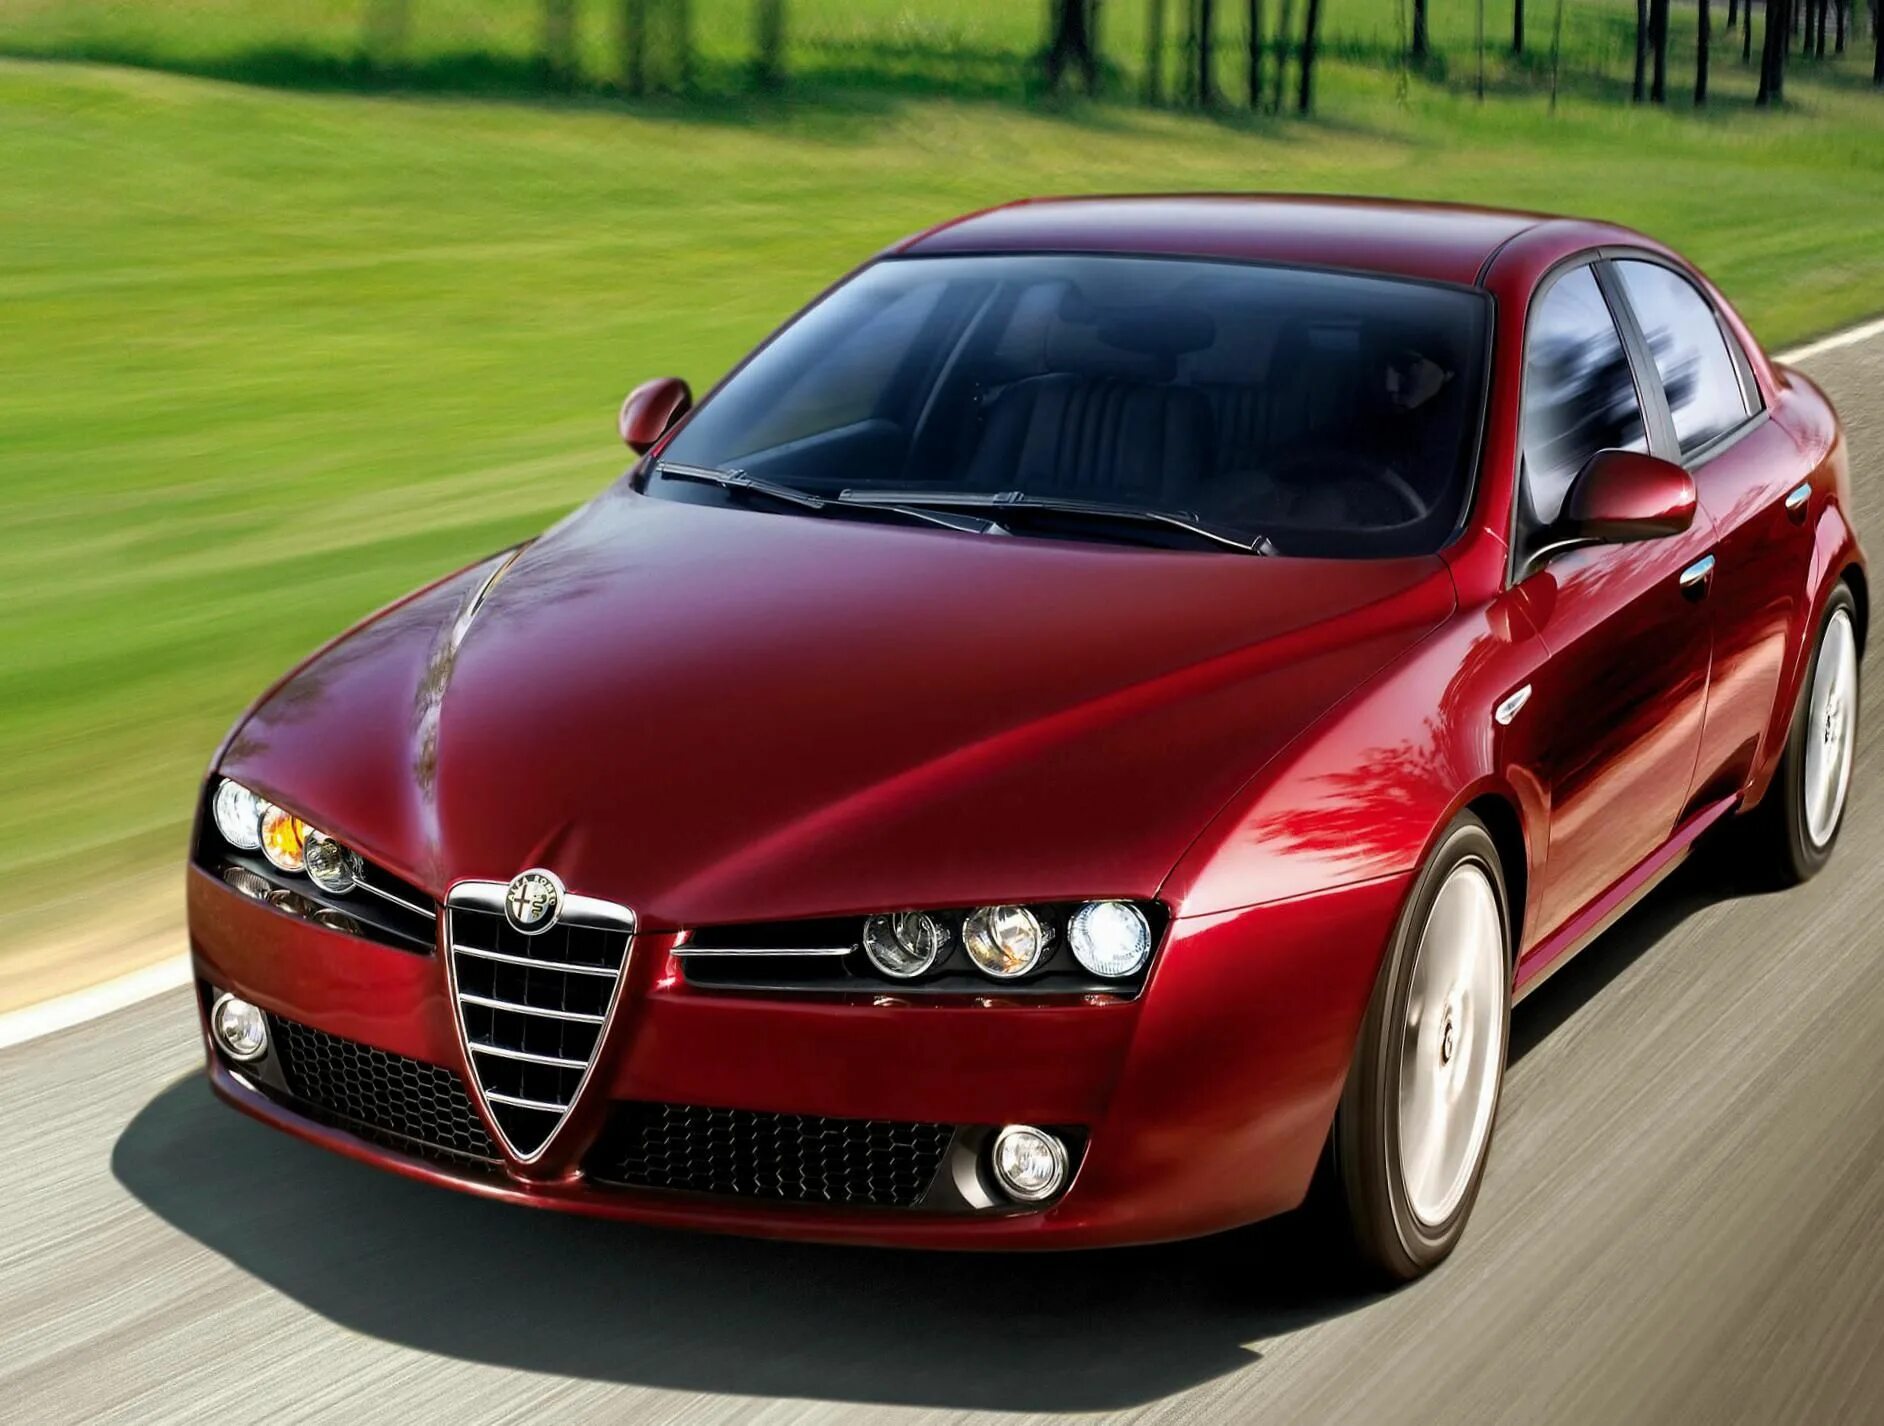 Автомобиль. Alfa Romeo 159. Alfa Romeo 159 седан. Alfa Romeo 159 auto. Alfa Romeo 159 Hatchback.